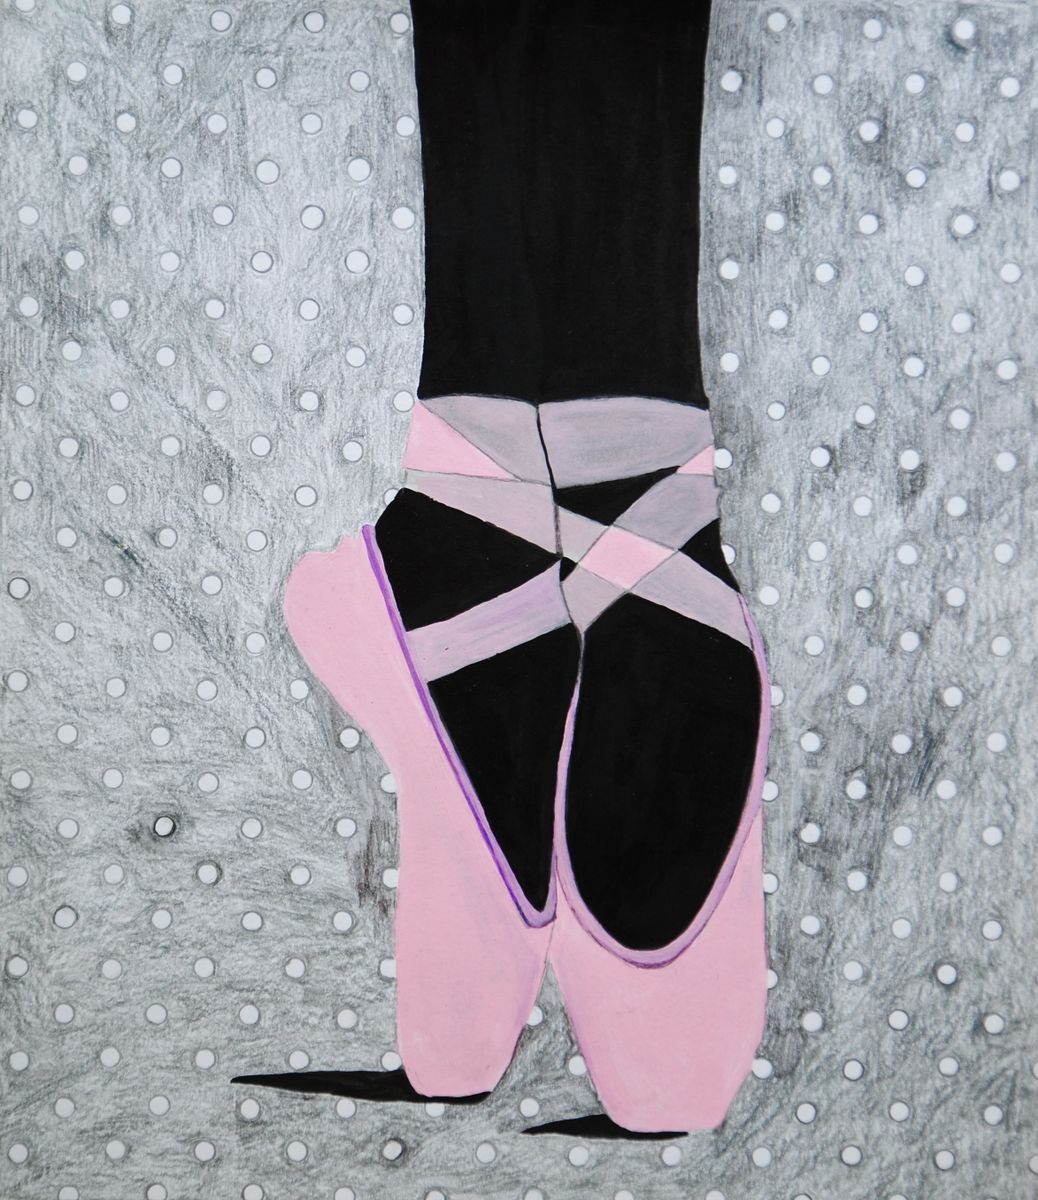 Ballet shoes / 34 x 29.7 cm by Alexandra Djokic